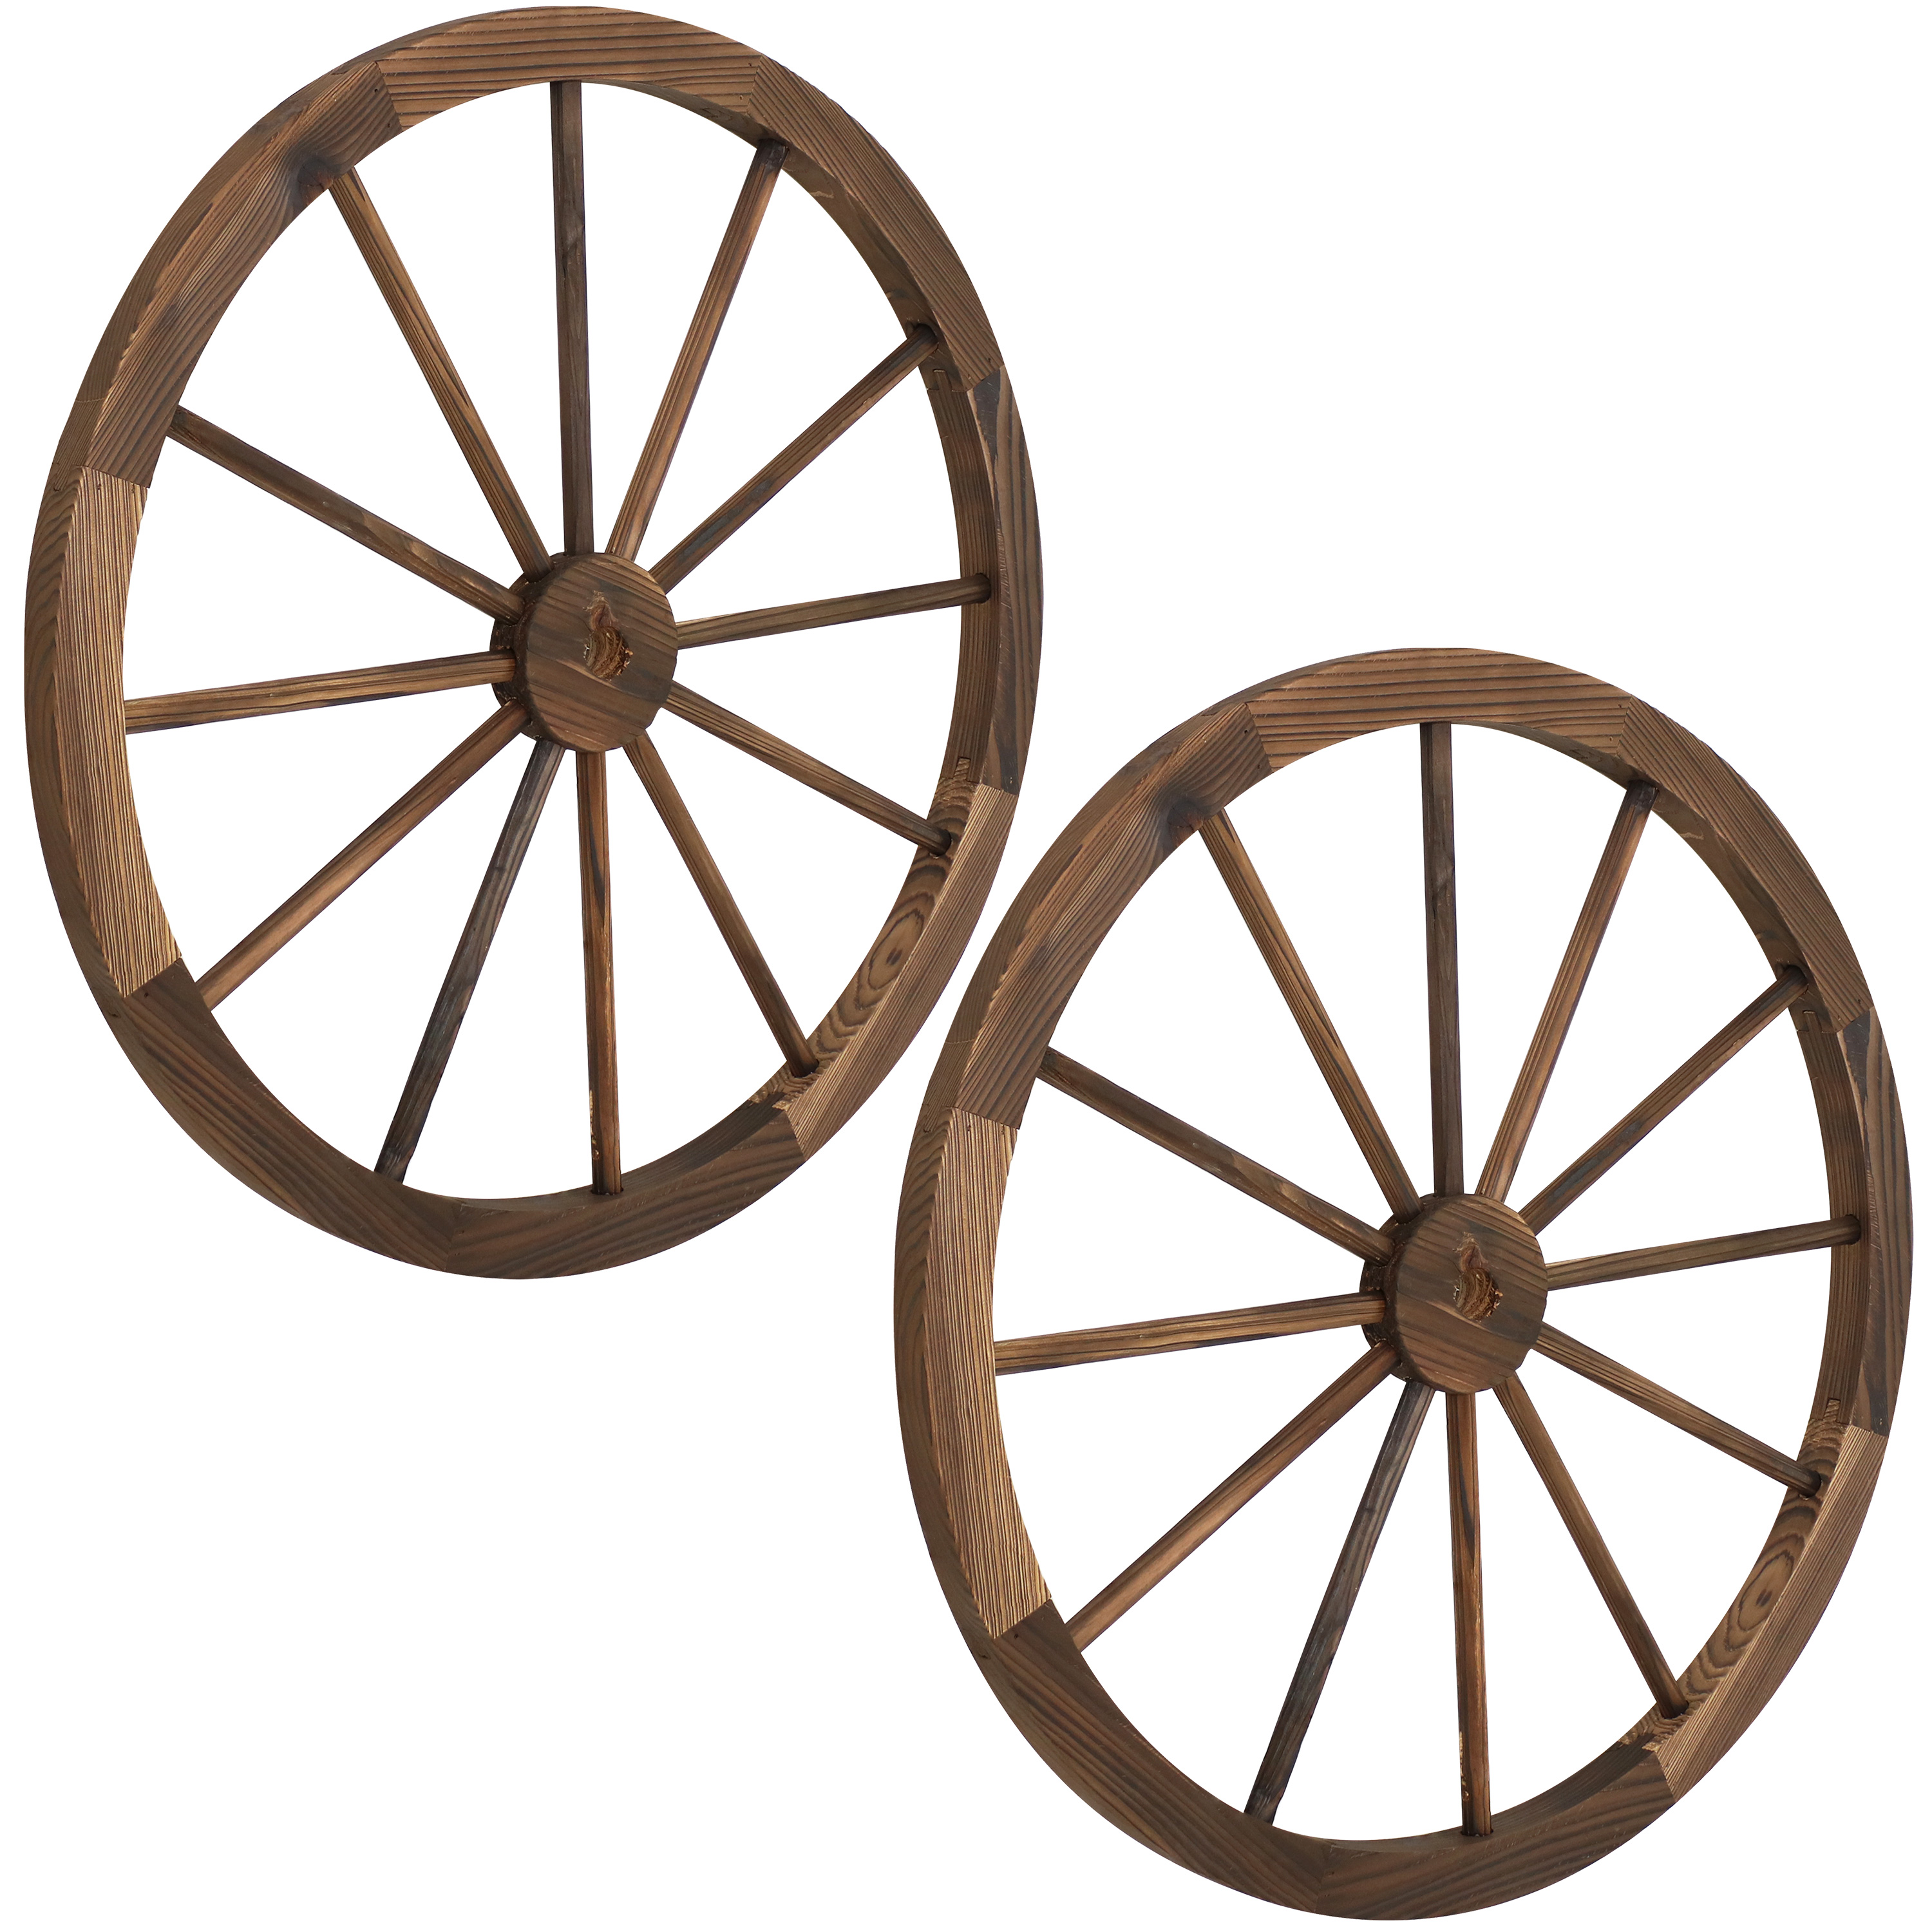 Sunnydaze Set of 2 Indoor/Outdoor Wooden Wagon Wheels - 29-Inch - Natural